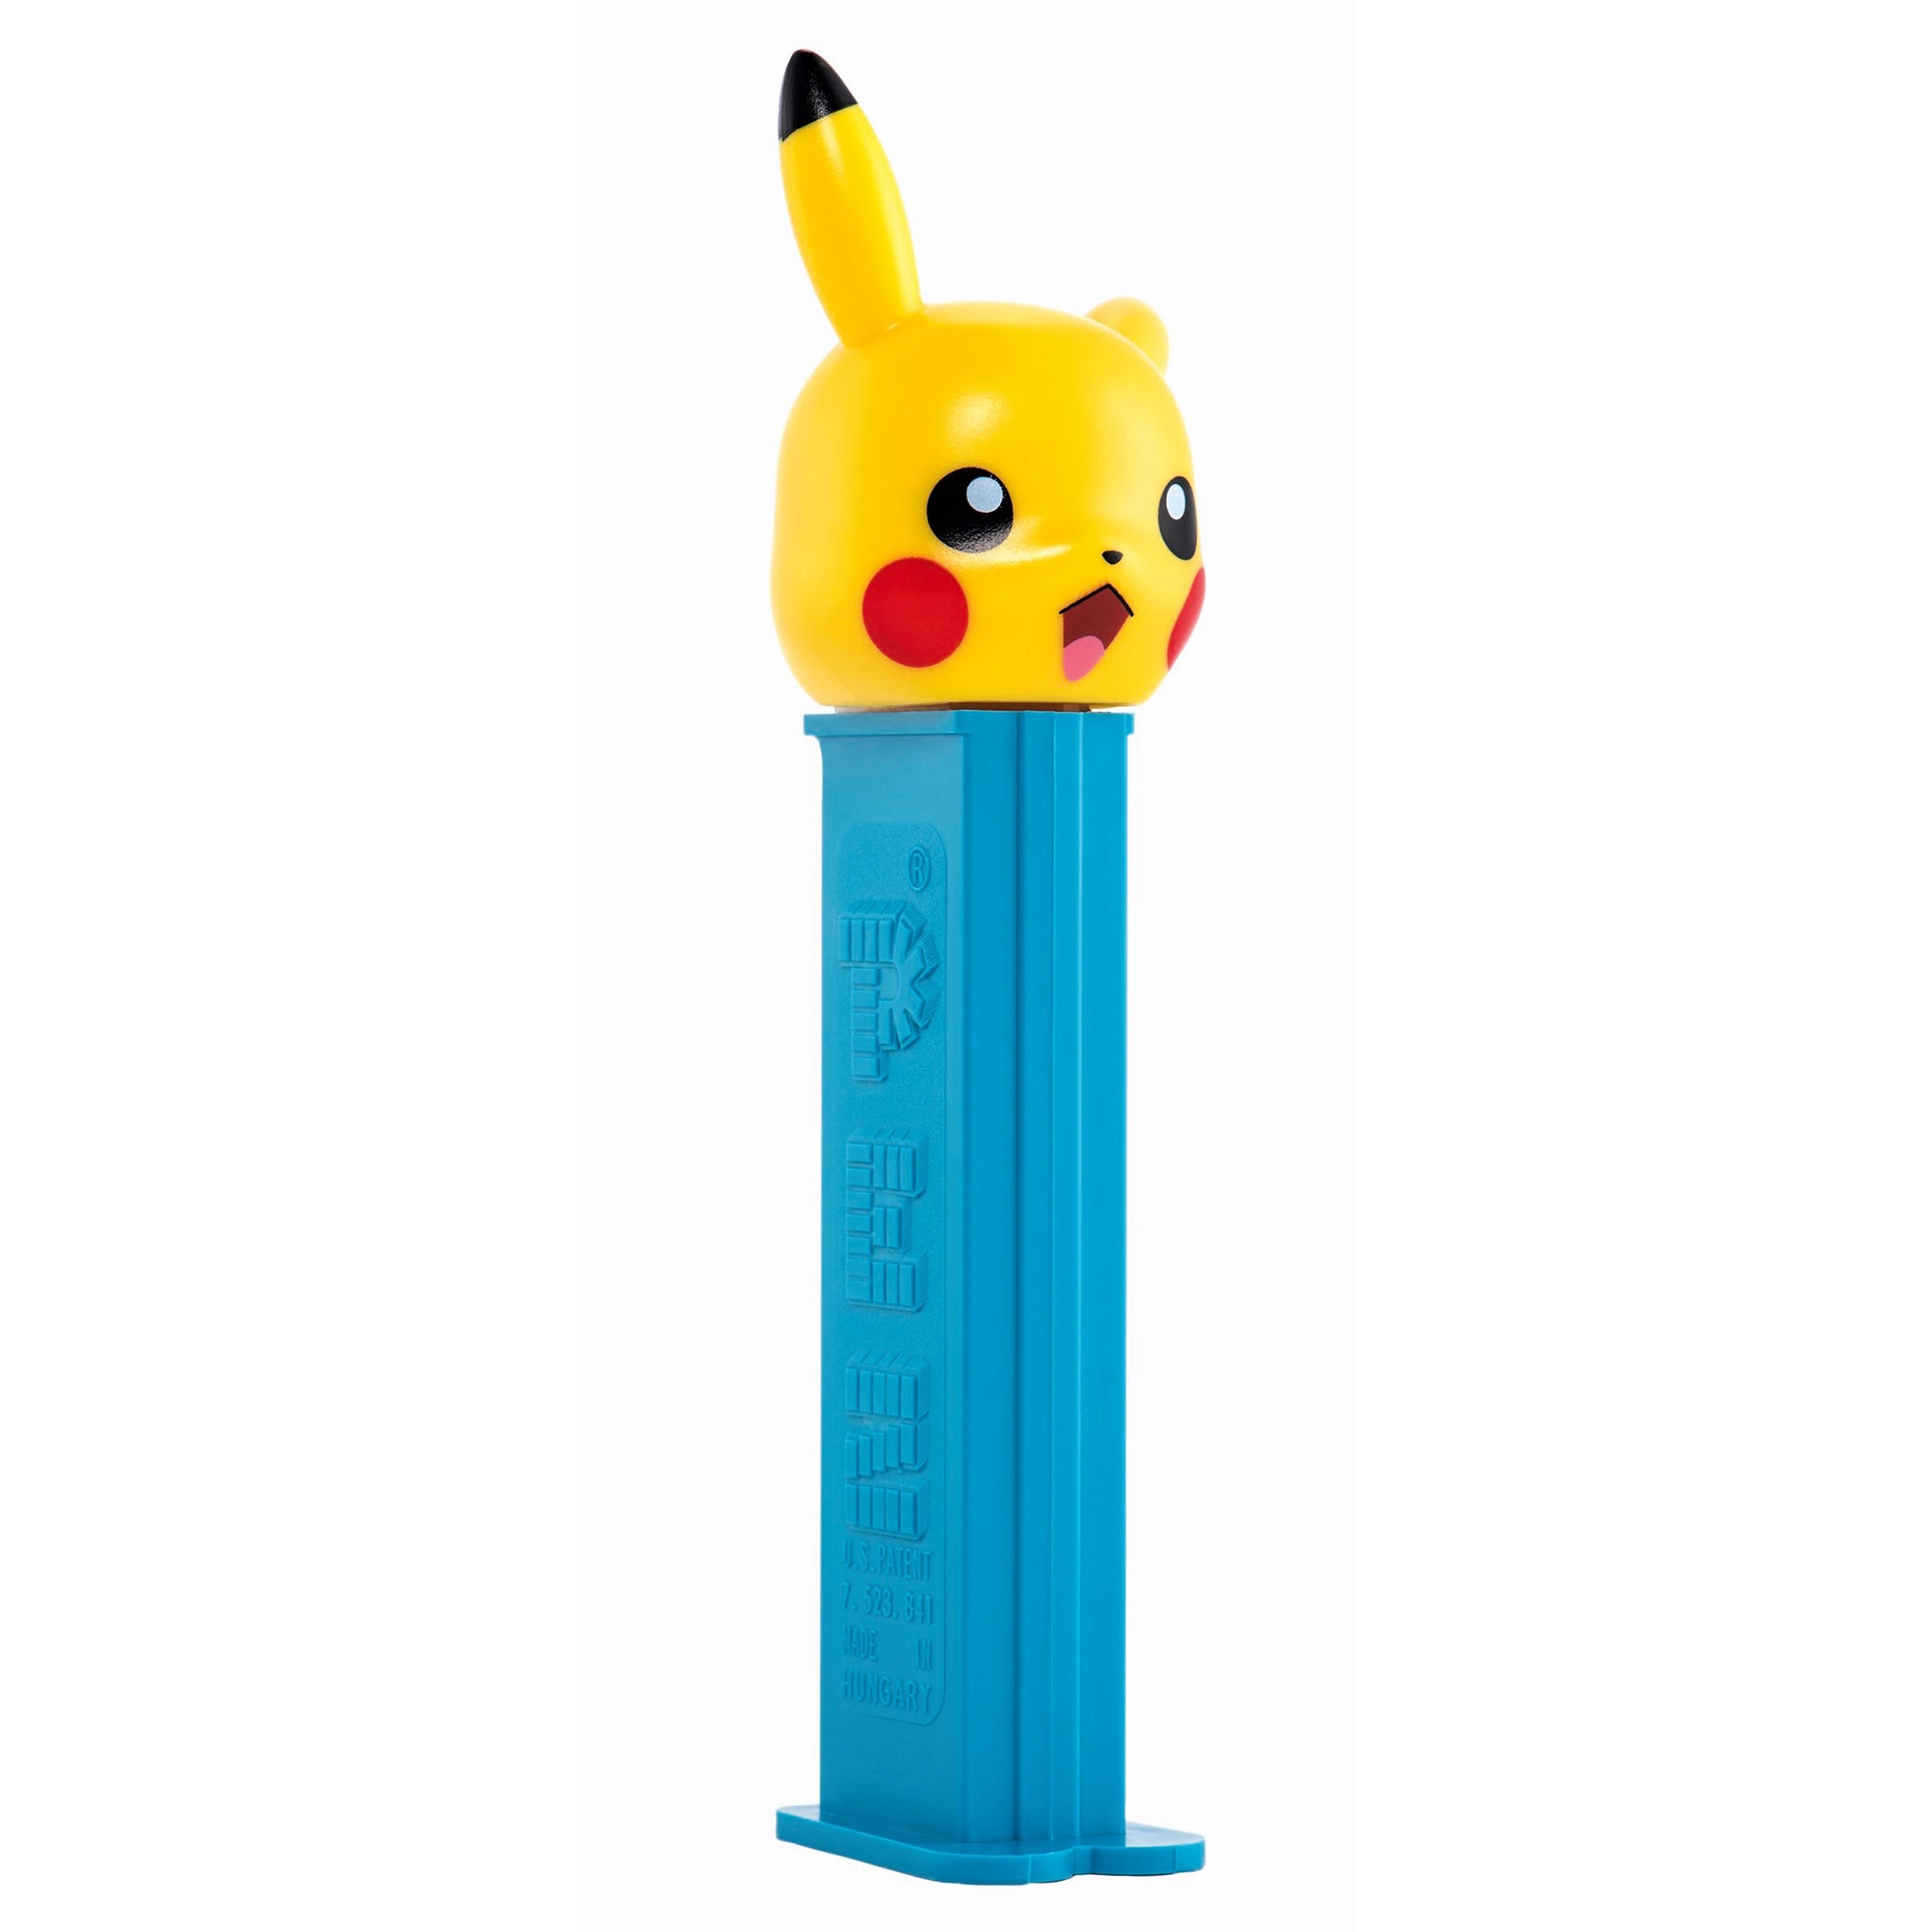 PEZ - Pikachu lachend "Pokémon" Spender & Bonbons